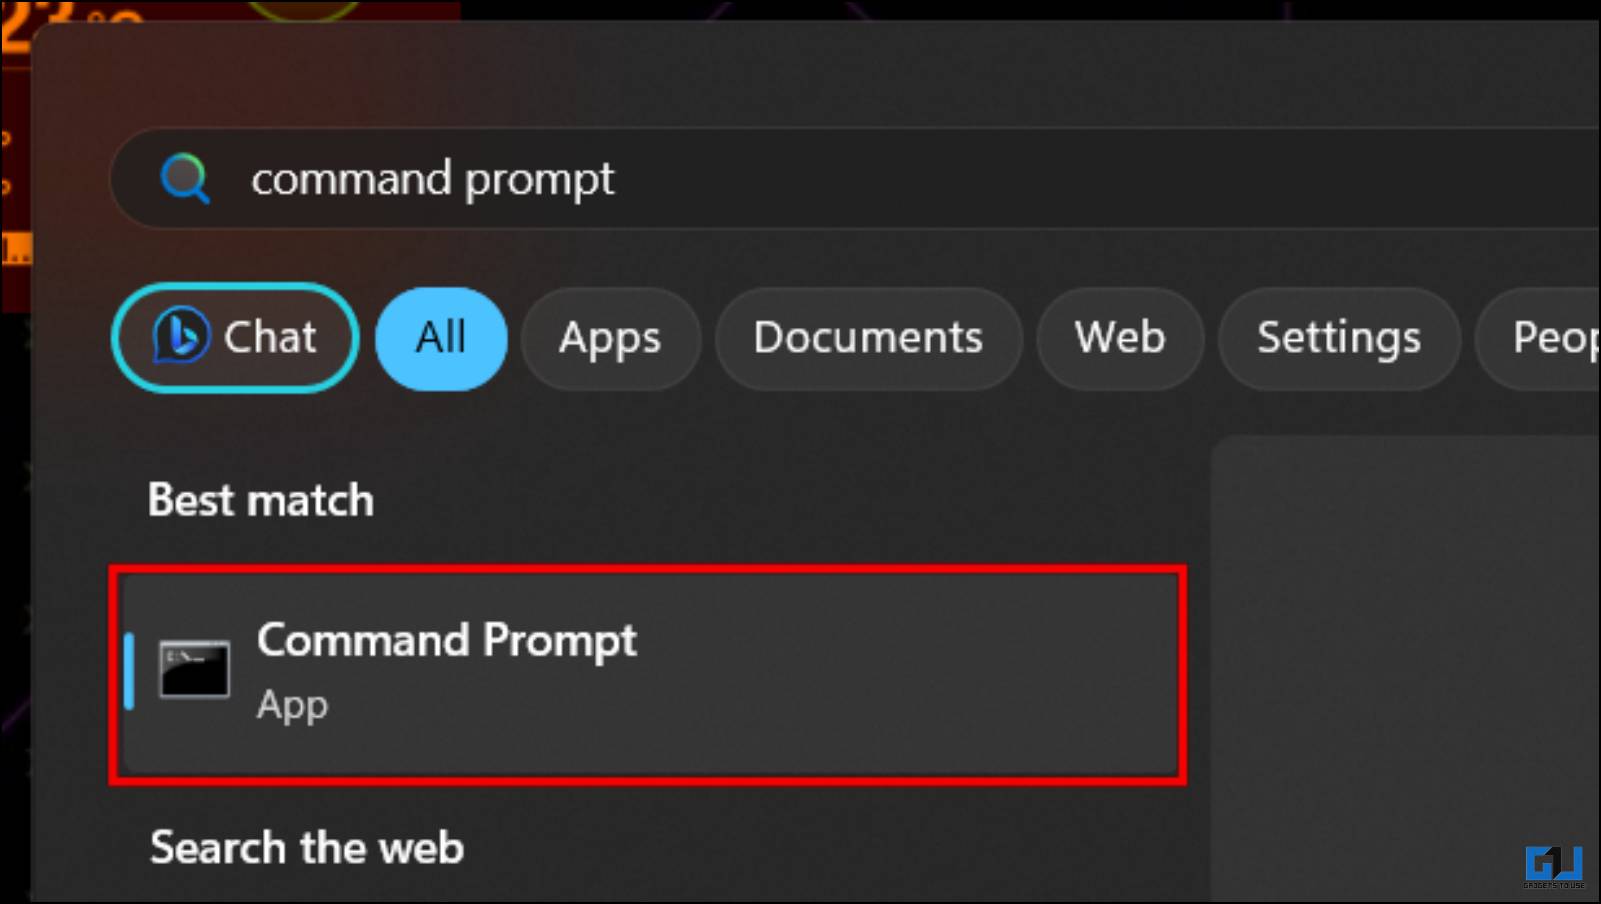 Open Command Prompt using the Windows Start Menu